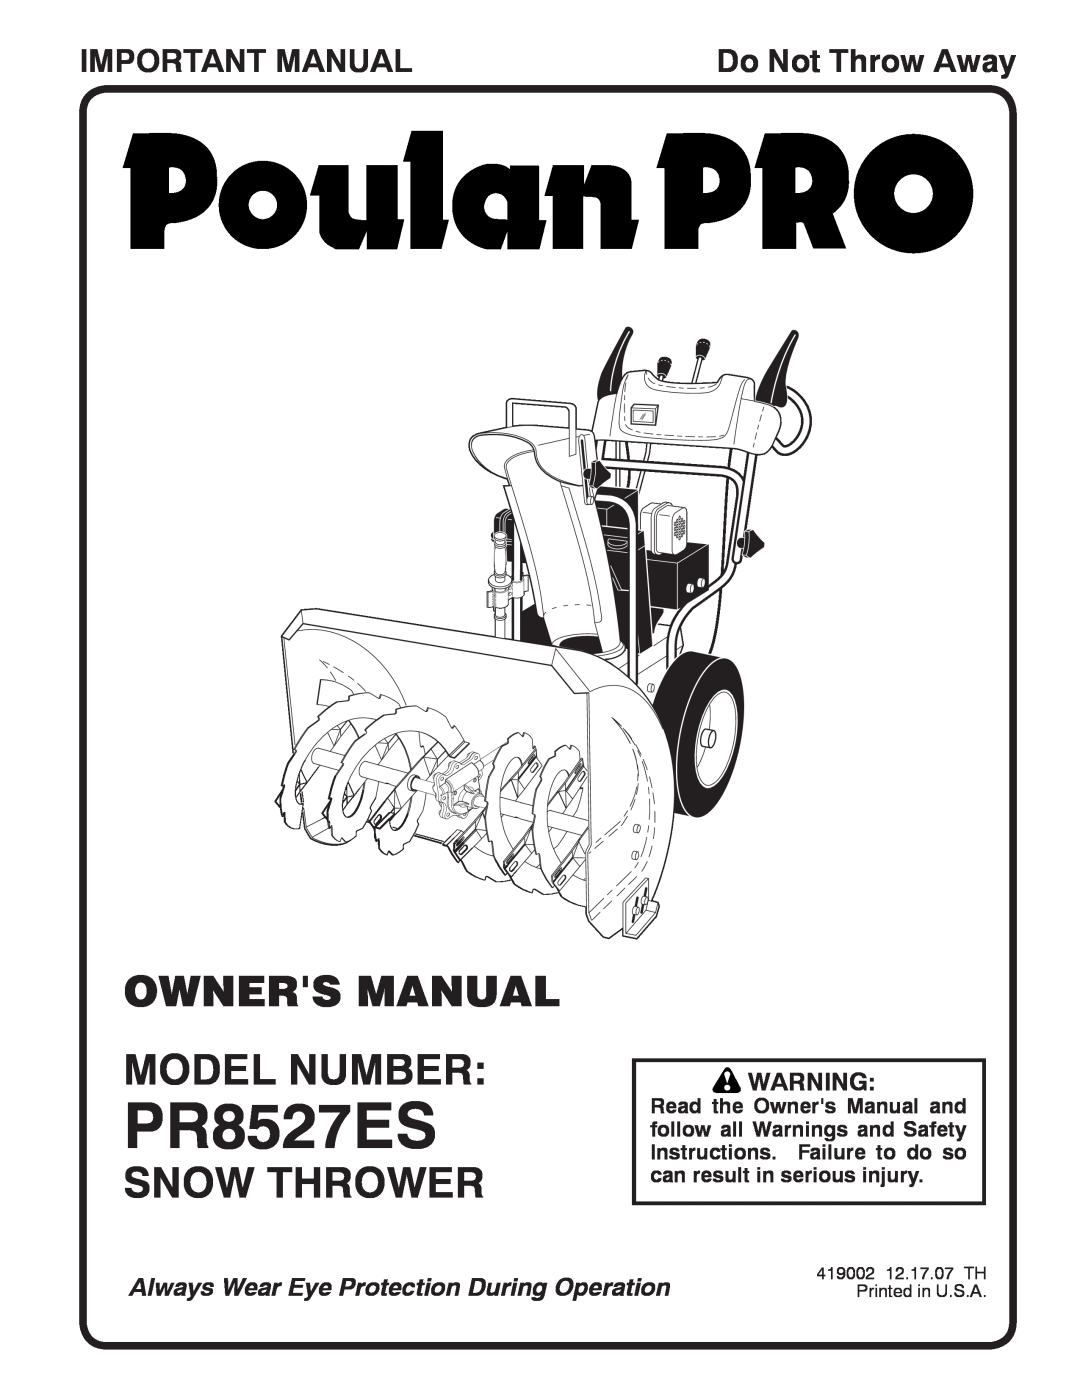 Poulan 419002 owner manual Snow Thrower, Important Manual, PR8527ES, Do Not Throw Away 